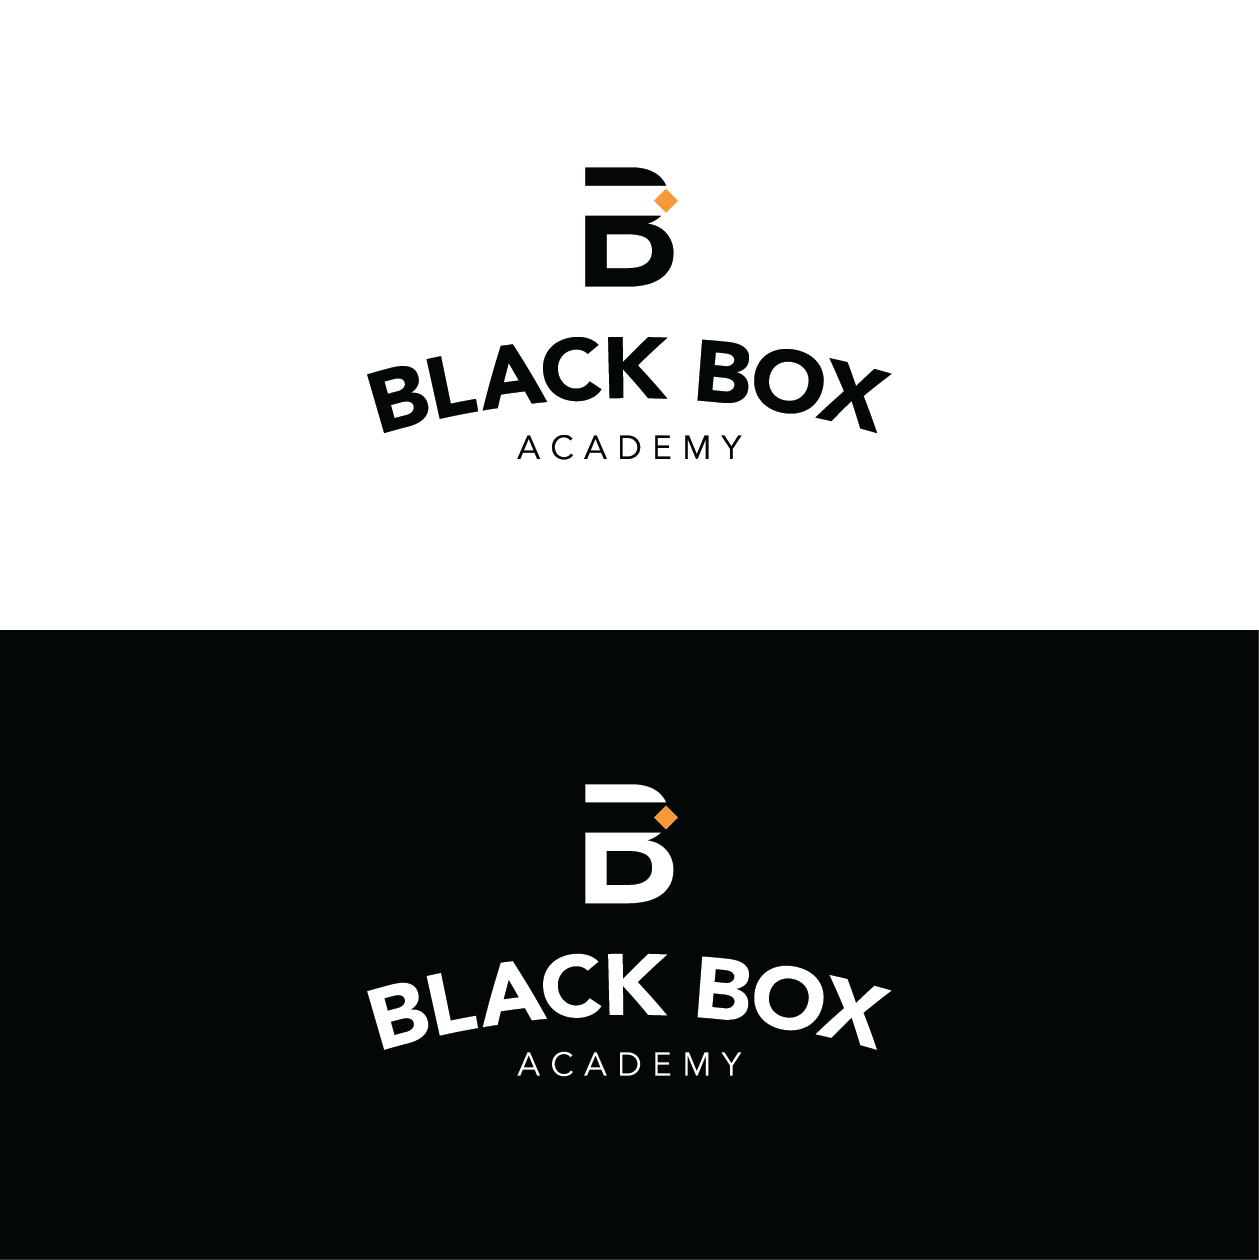 Black Education Logo - Traditional, Upmarket, Education Logo Design for Black Box Academy ...